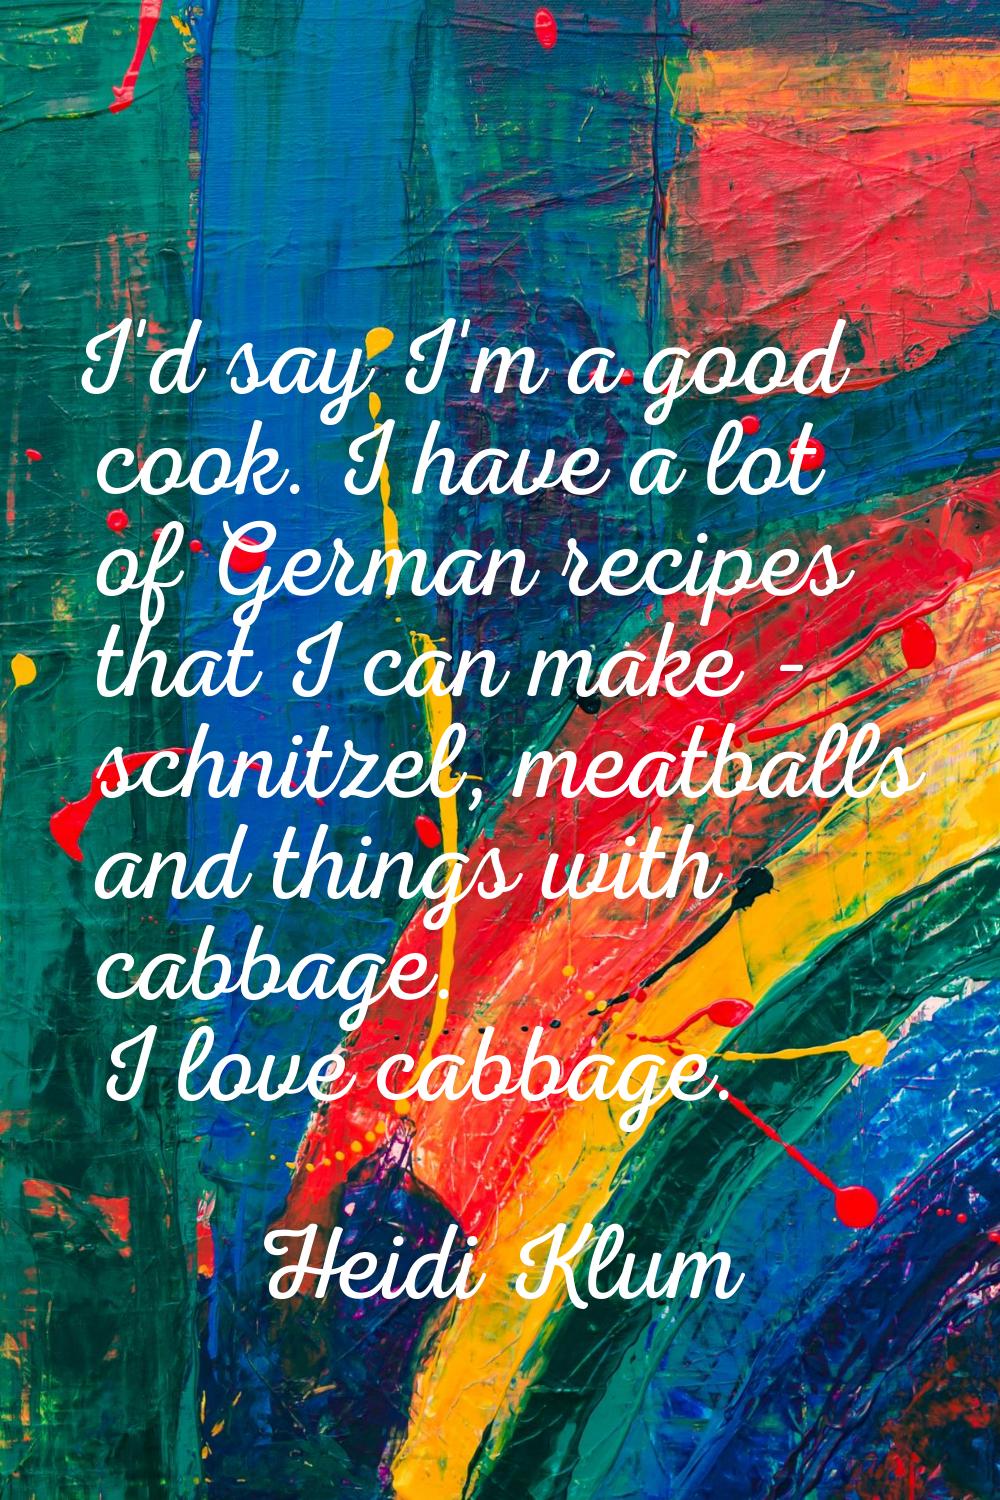 I'd say I'm a good cook. I have a lot of German recipes that I can make - schnitzel, meatballs and 